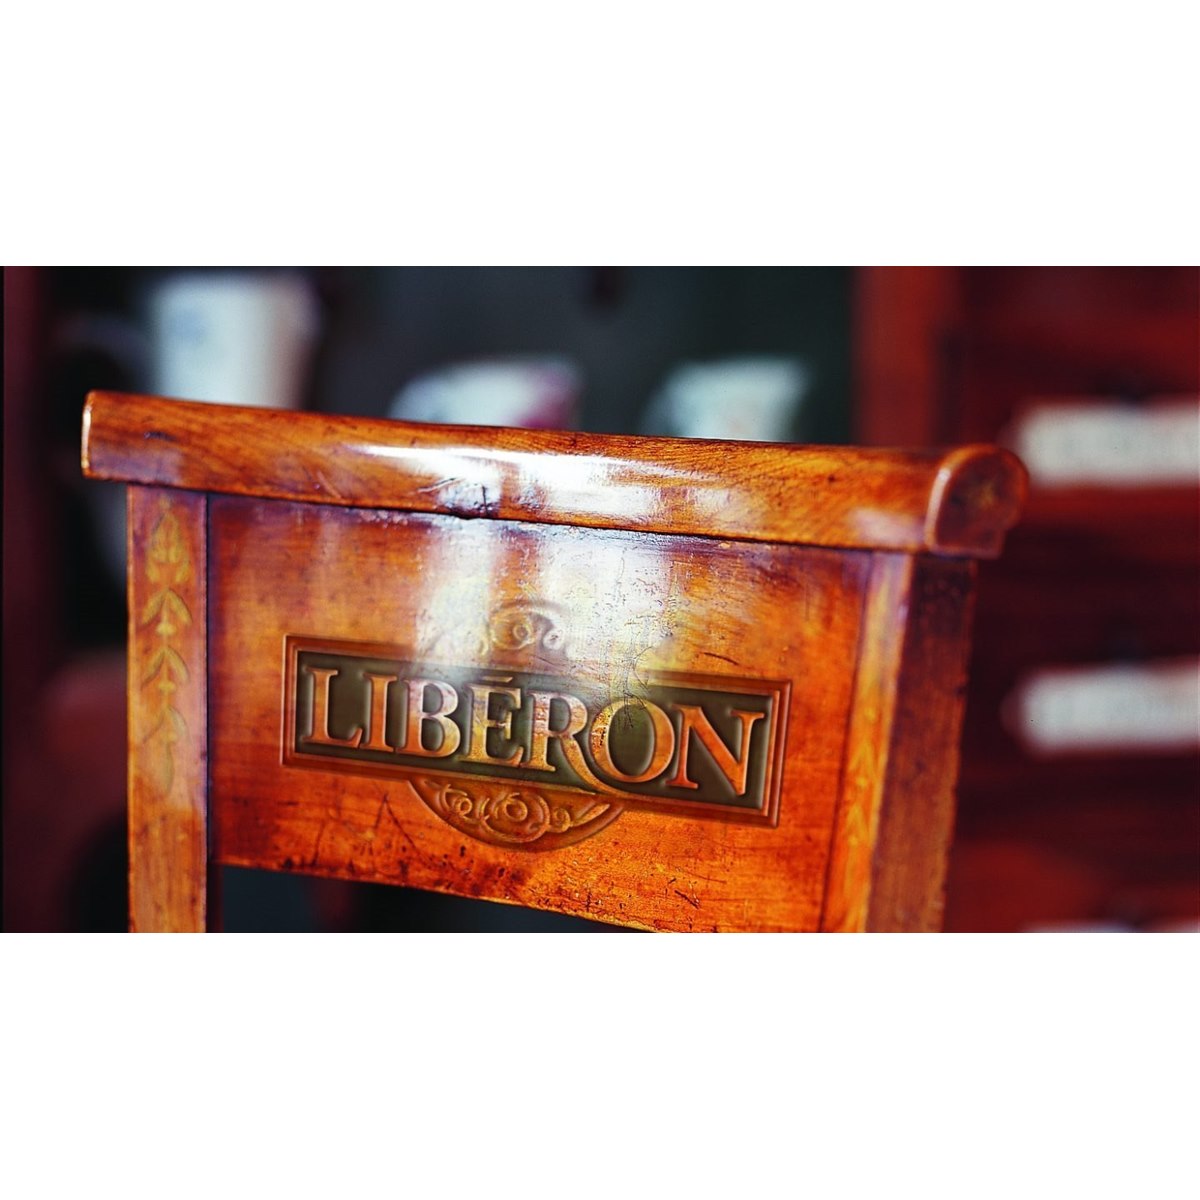 Where to buy Liberon Liquid Beeswax with Turpentine